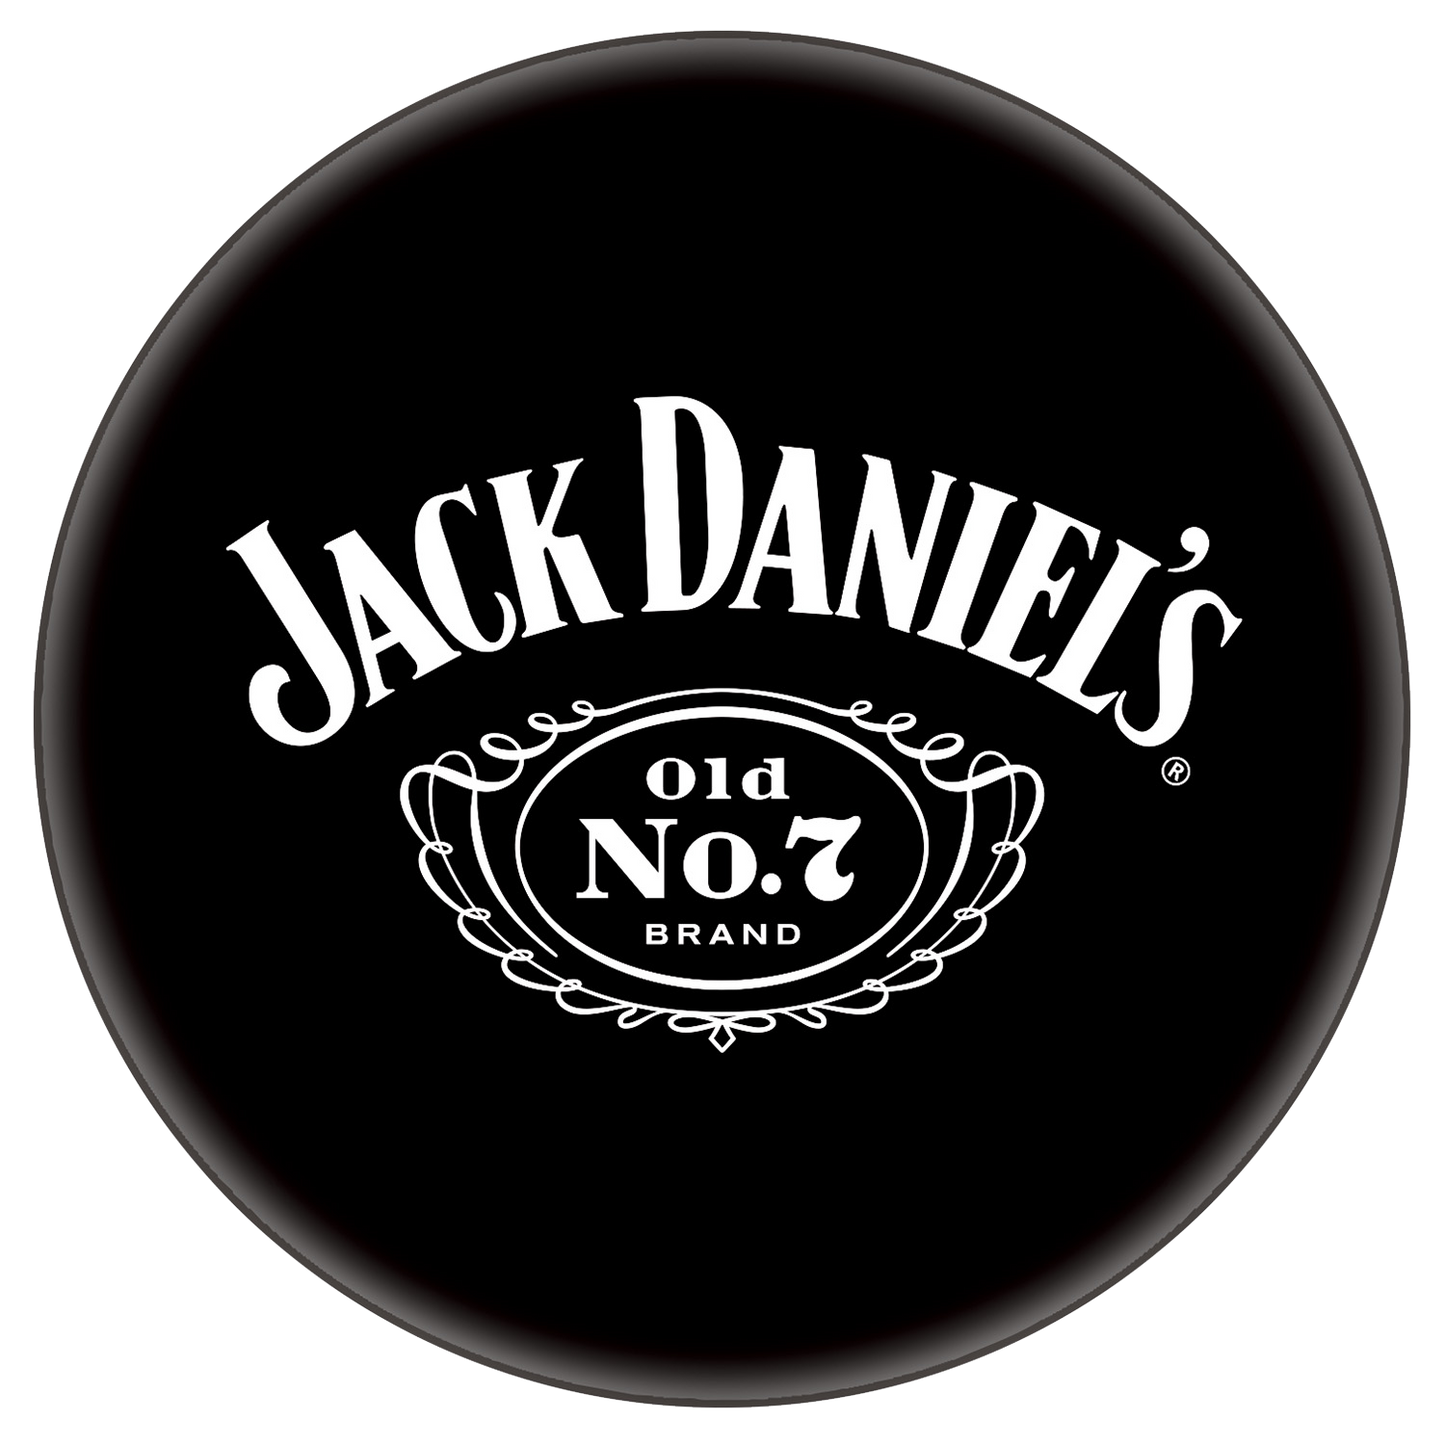 Jack Daniel's Bar Stool with Backrest